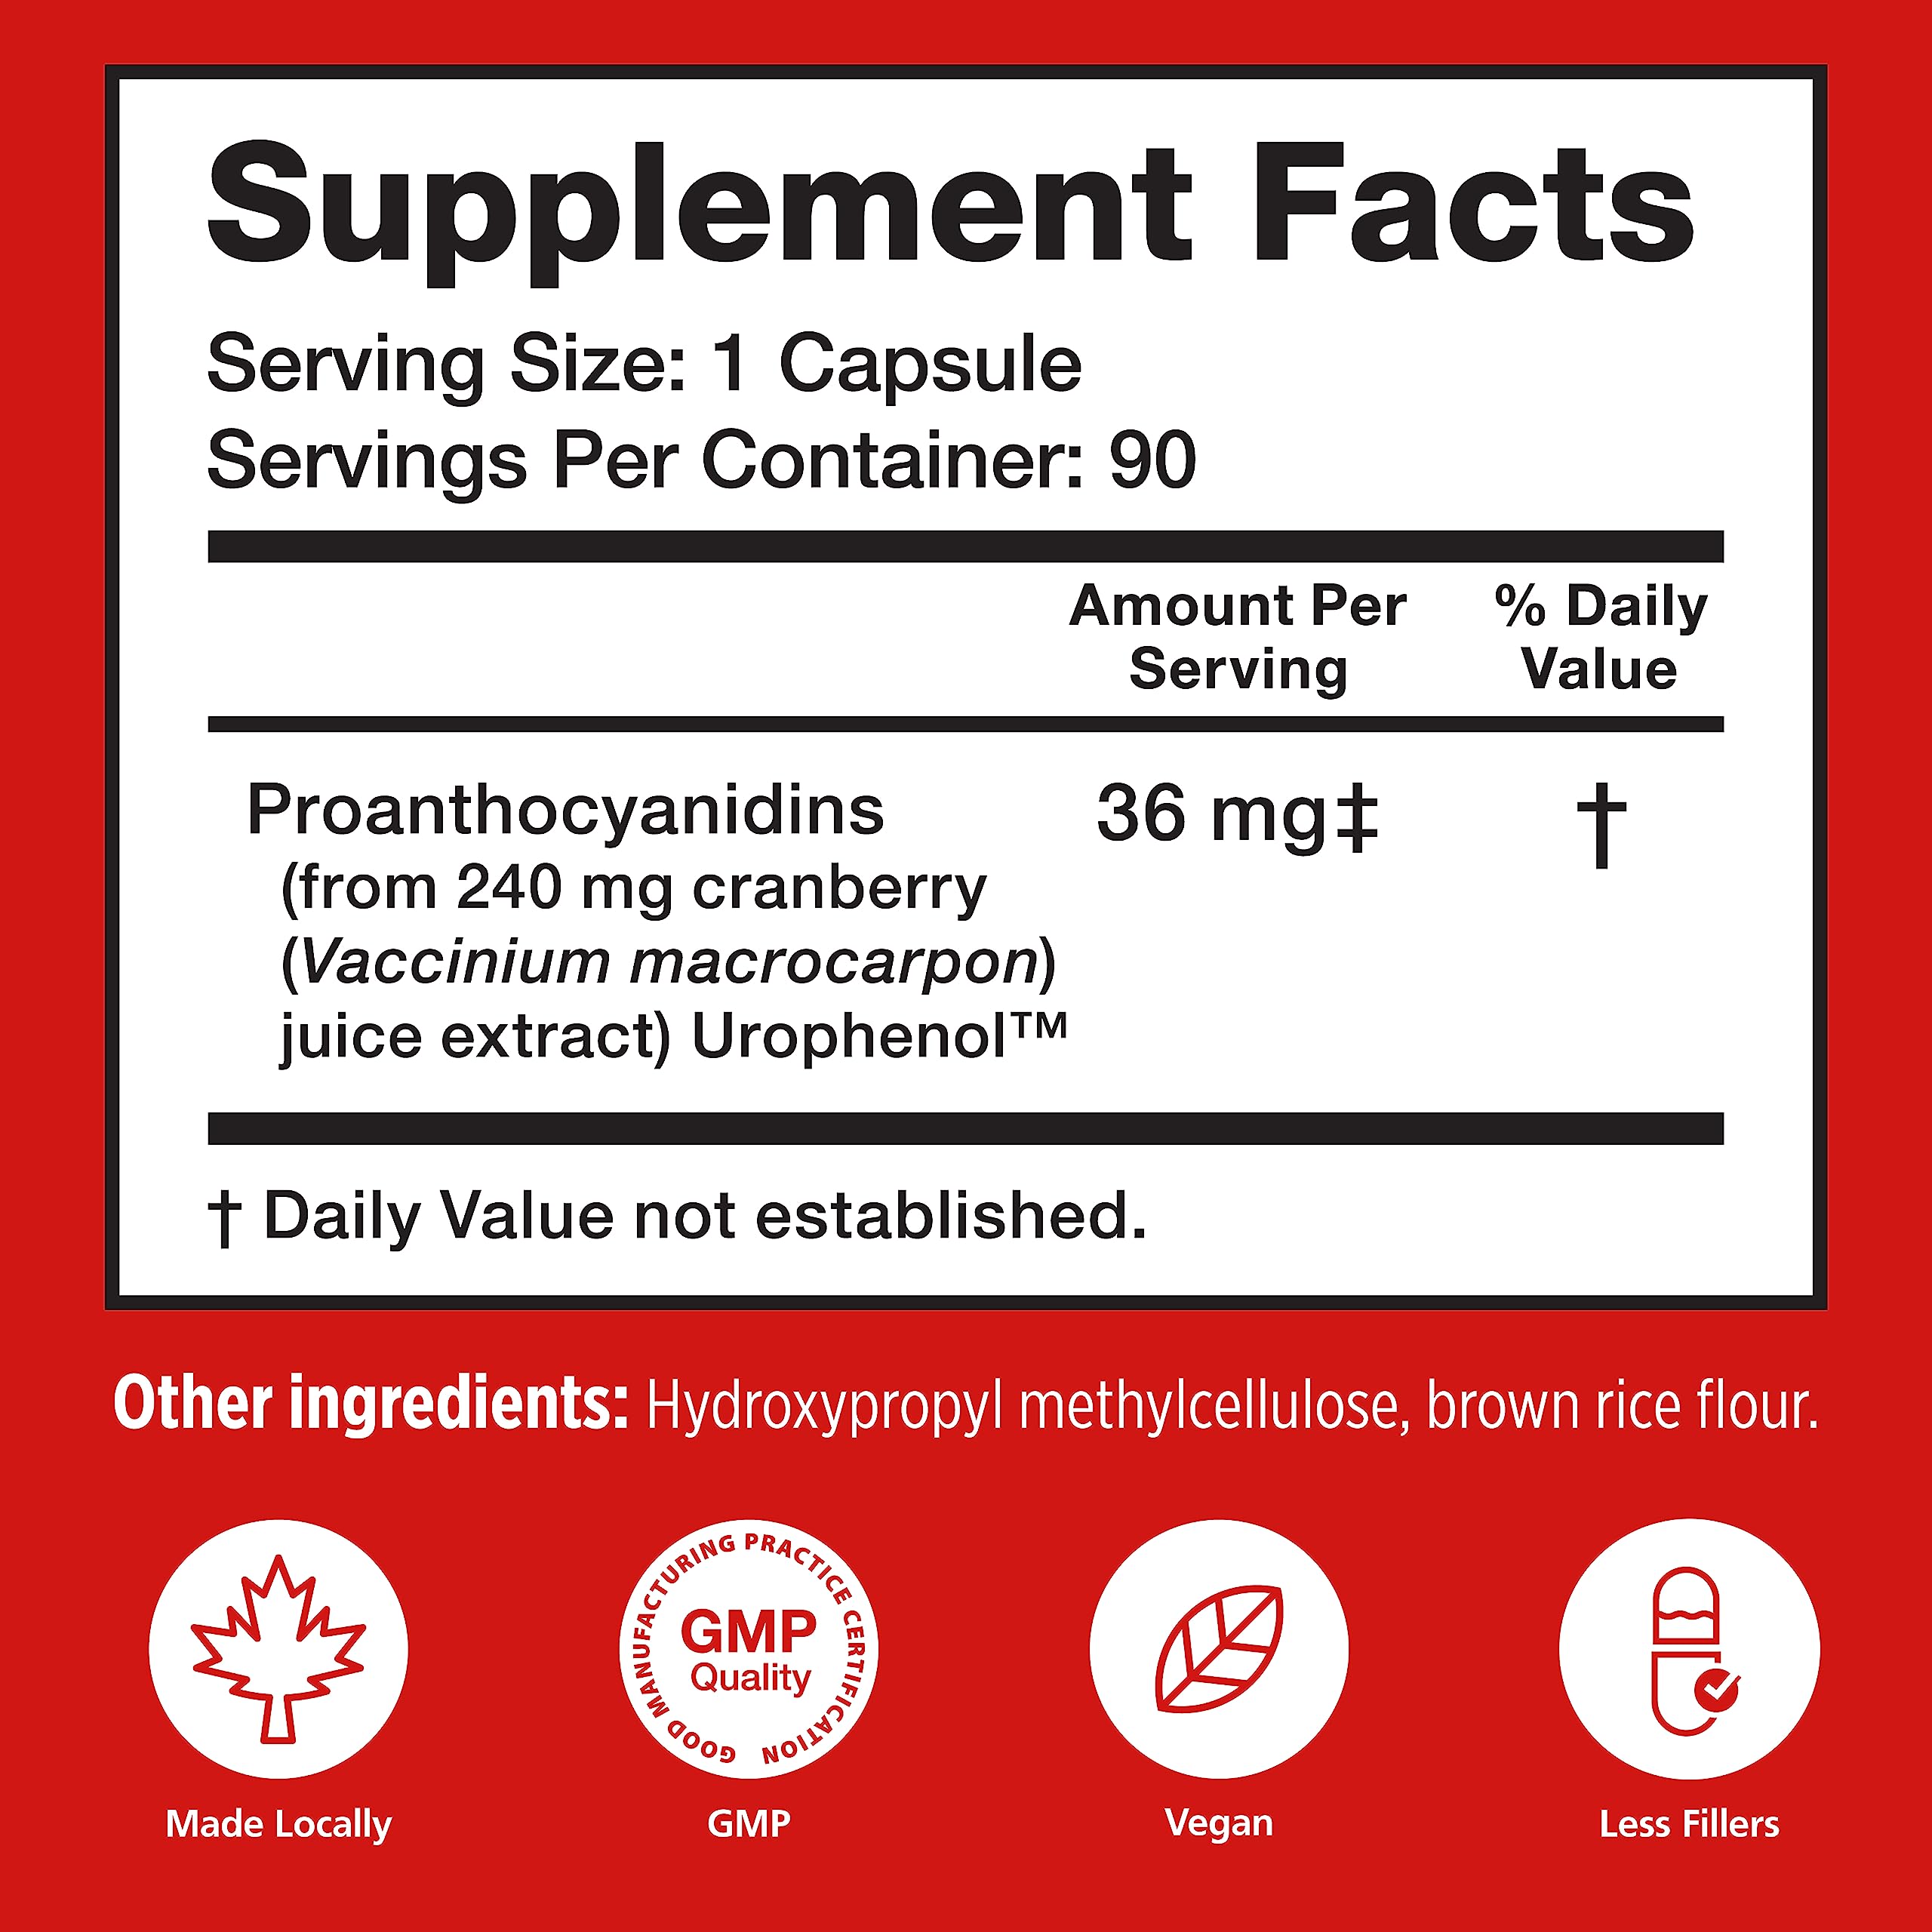 Utiva Cranberry PACs Urinary Tract Health Supplement (90 Vegi Capsules)